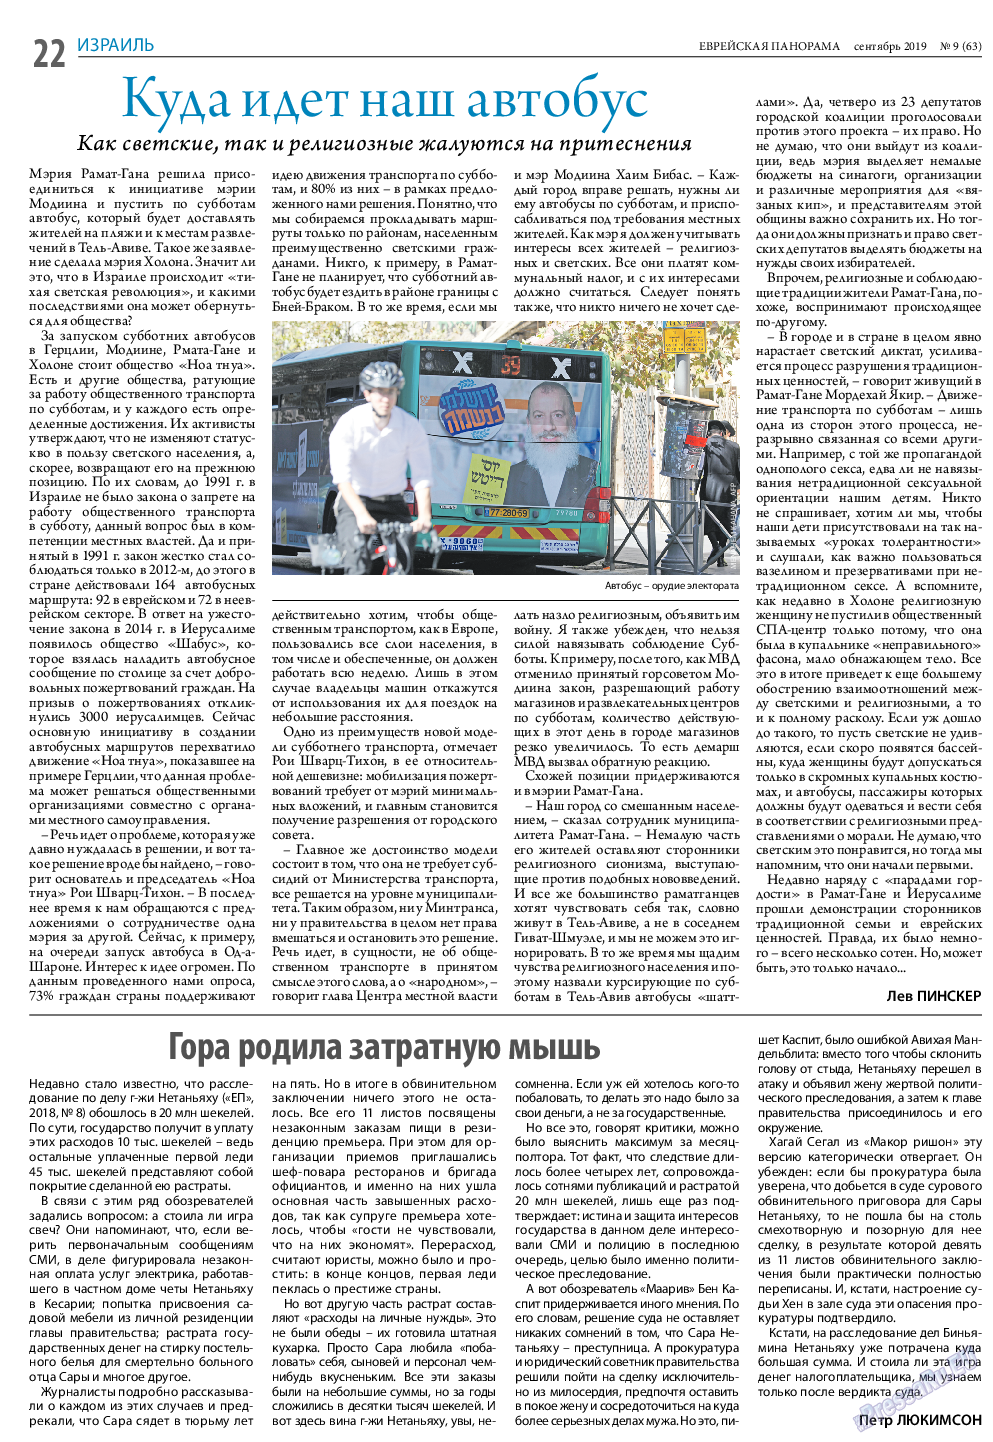 Еврейская панорама, газета. 2019 №9 стр.22